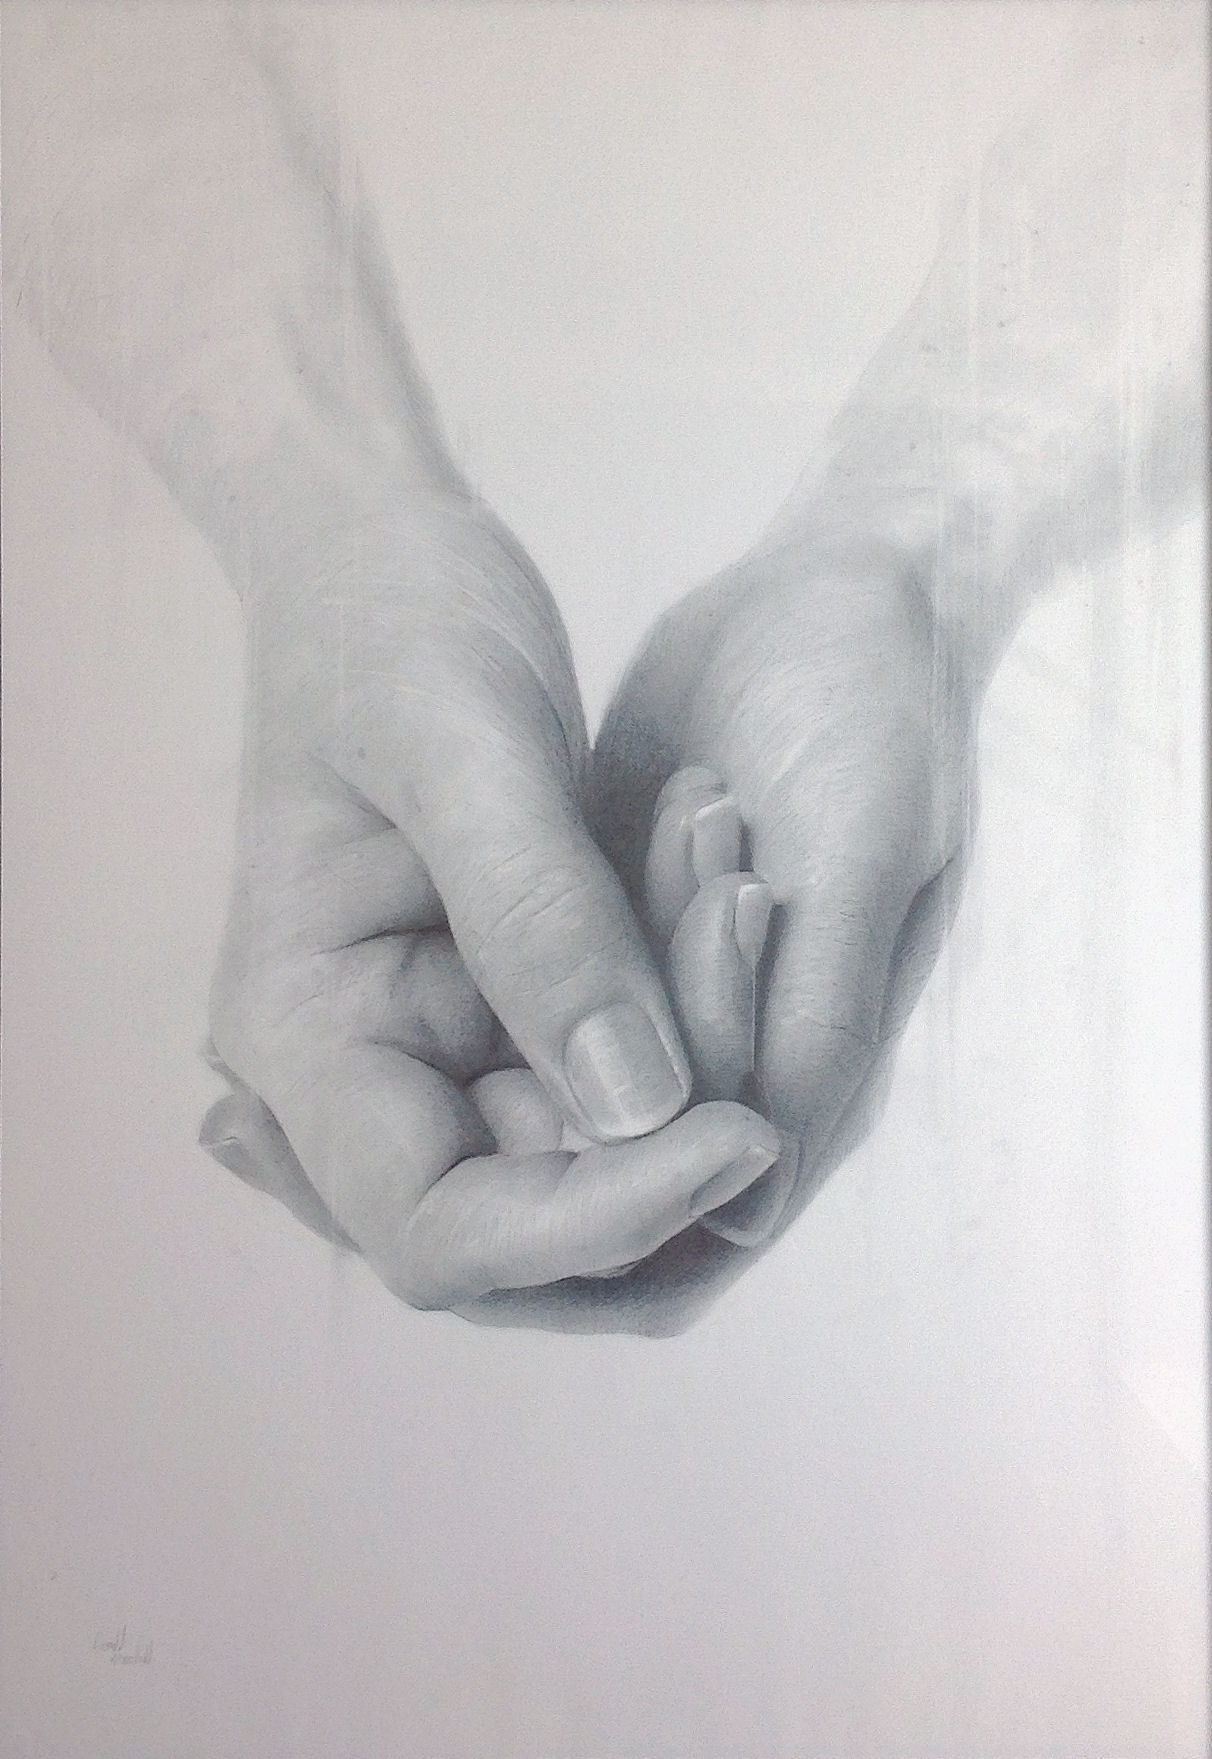 'Hand Study #1' by artist Donald Macdonald